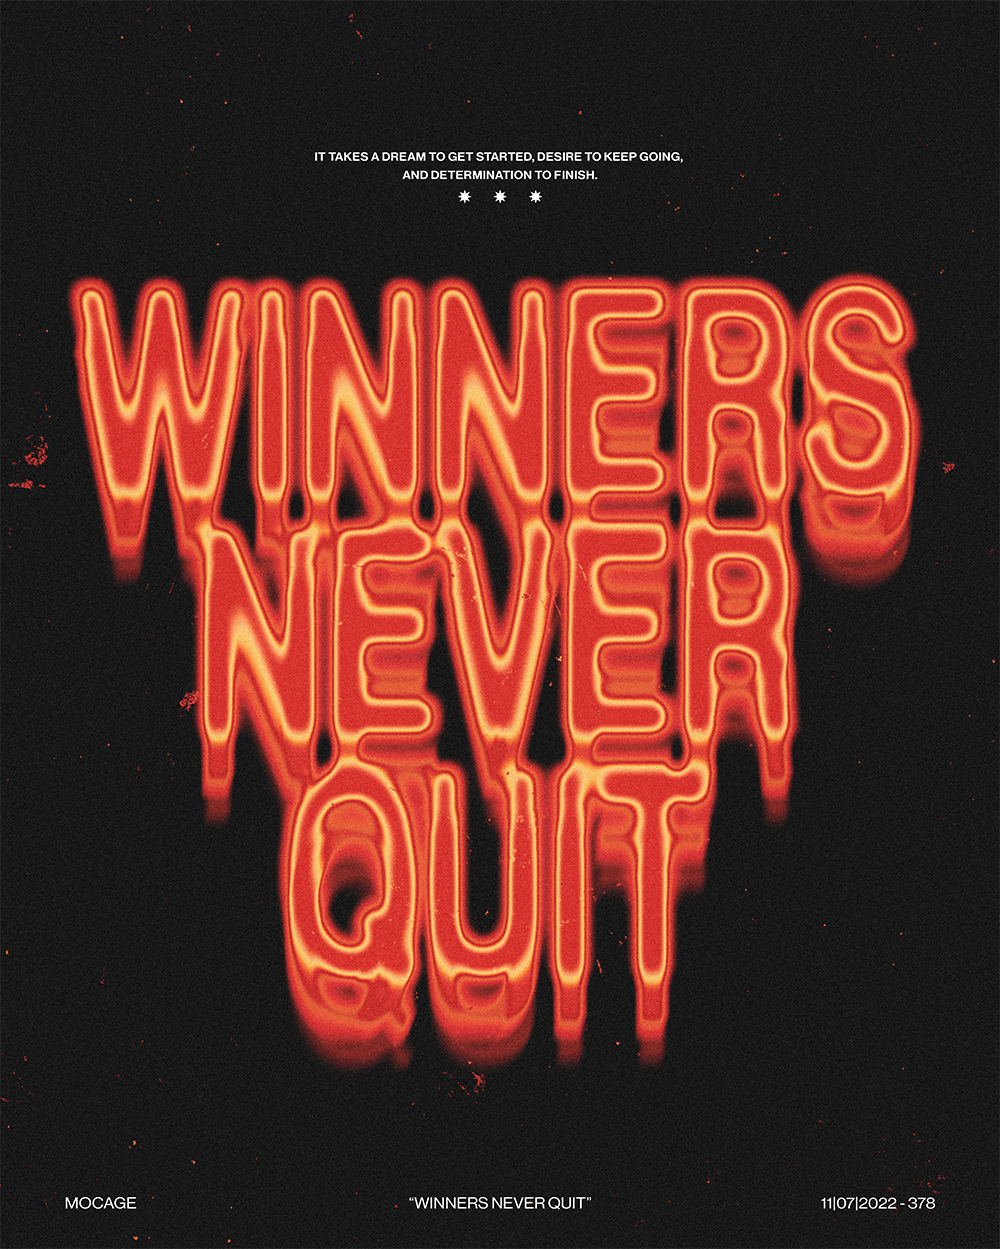 “Winners never quit”